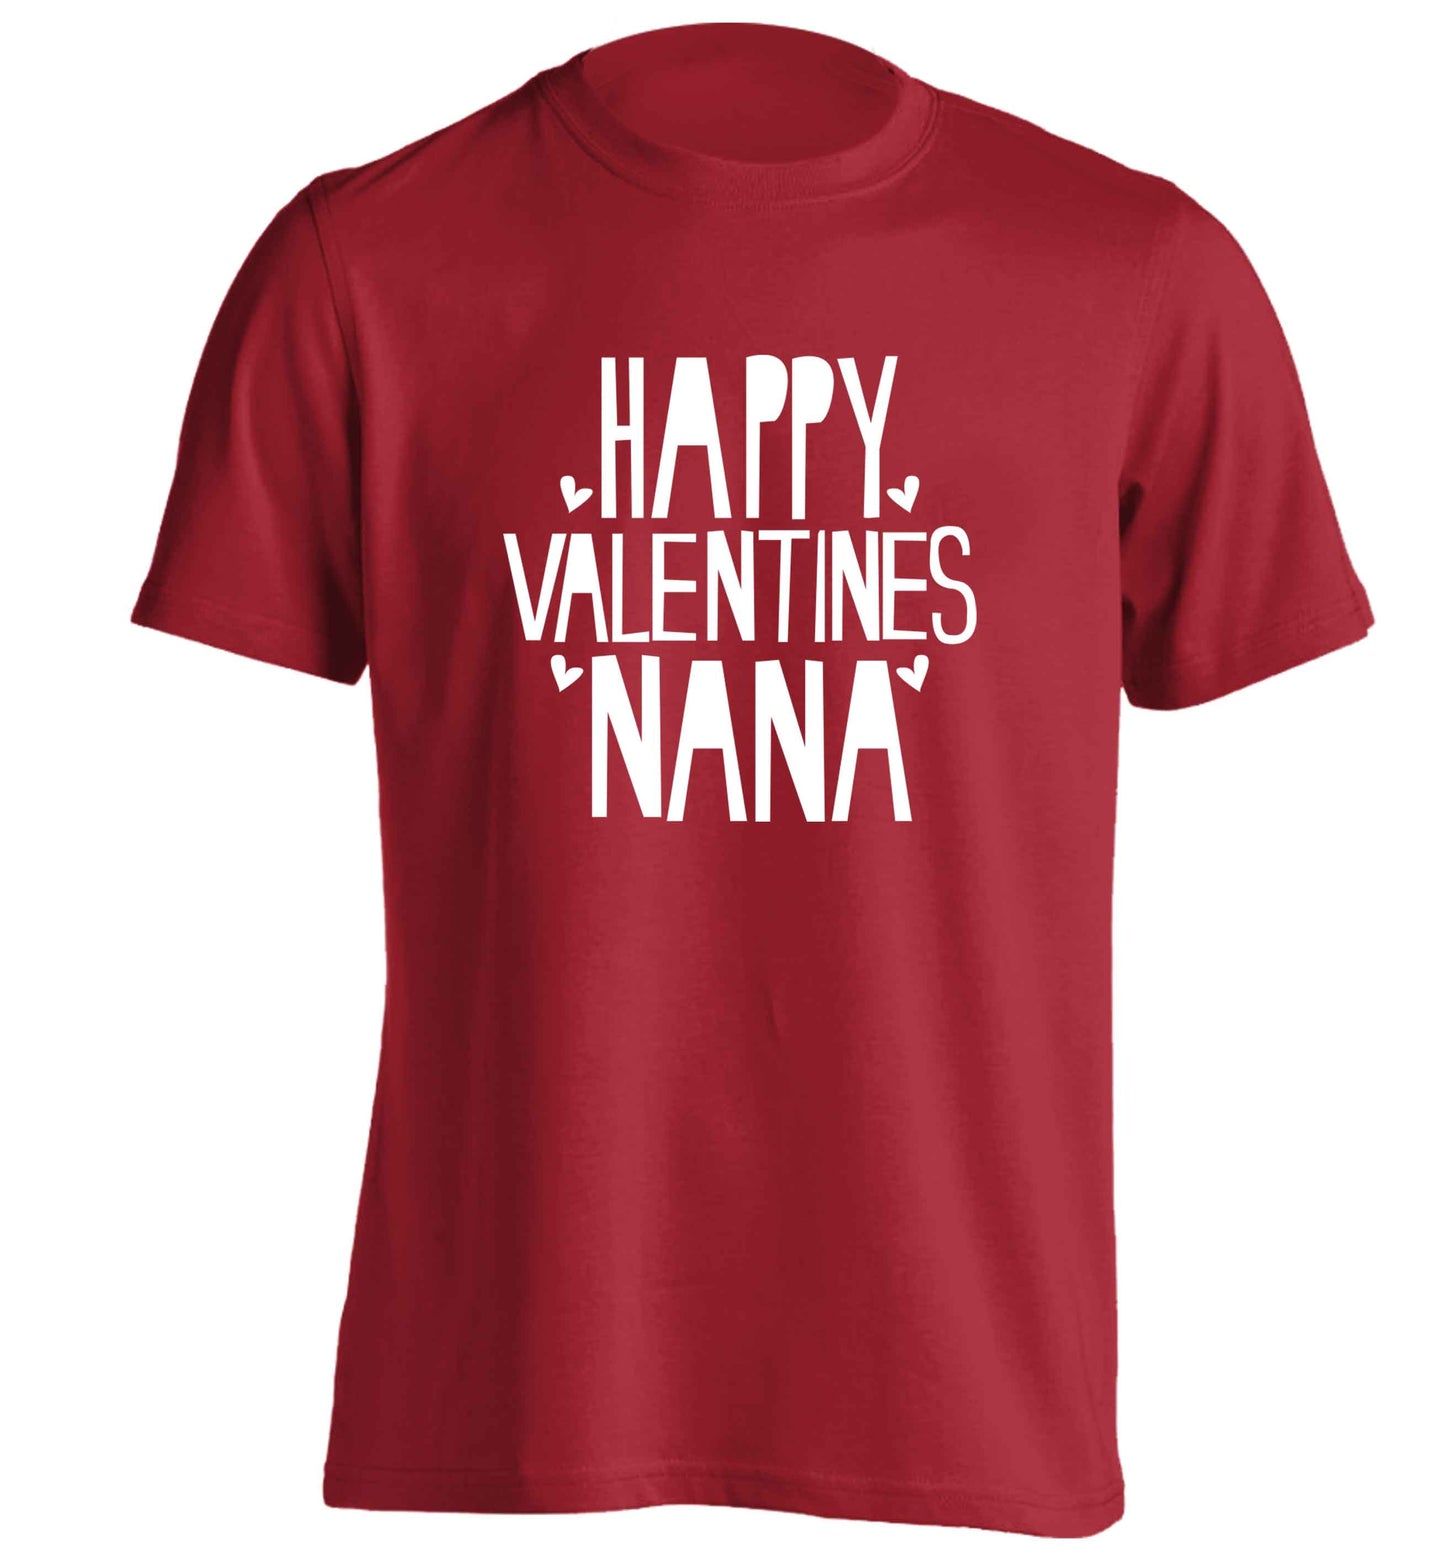 Happy valentines nana adults unisex red Tshirt 2XL